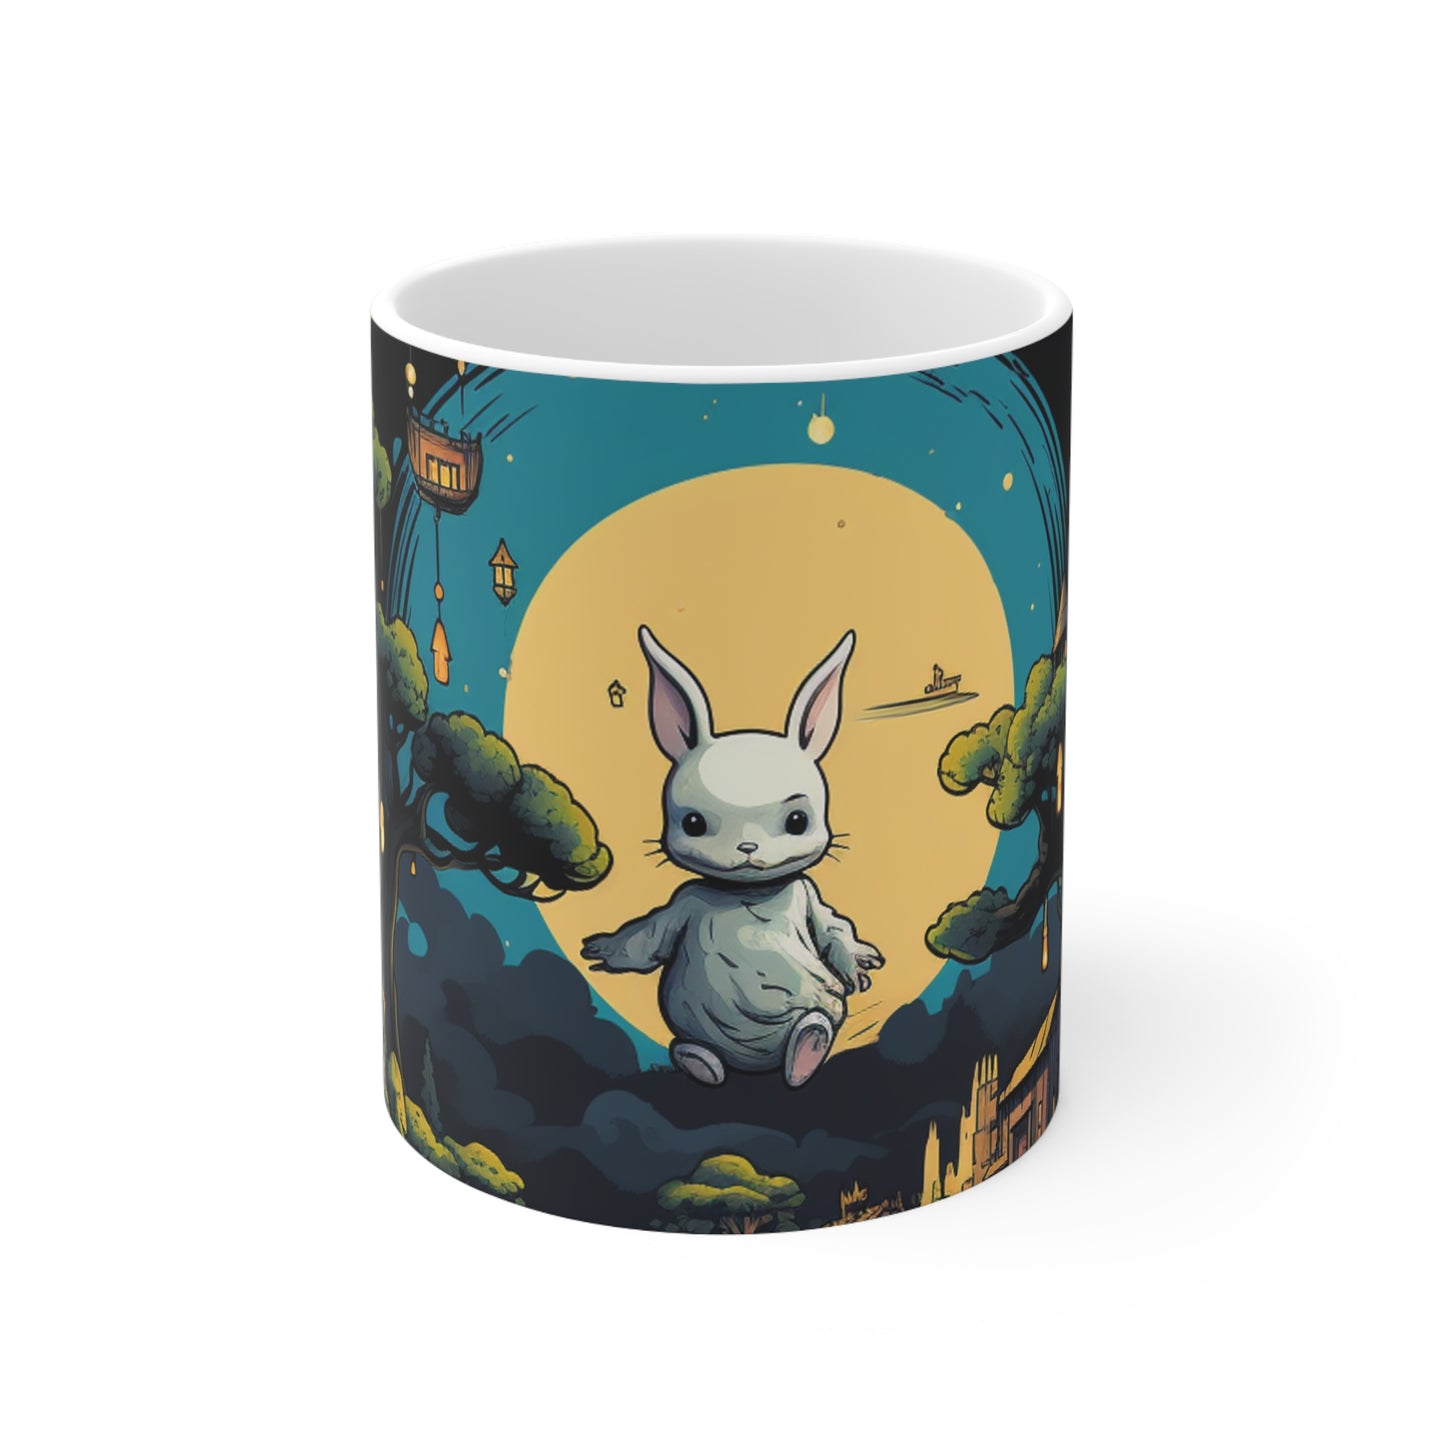 White Rabbit Mystery Psychedelic Fantasy Anime Cartoon Bunny - Ceramic Mug 11oz